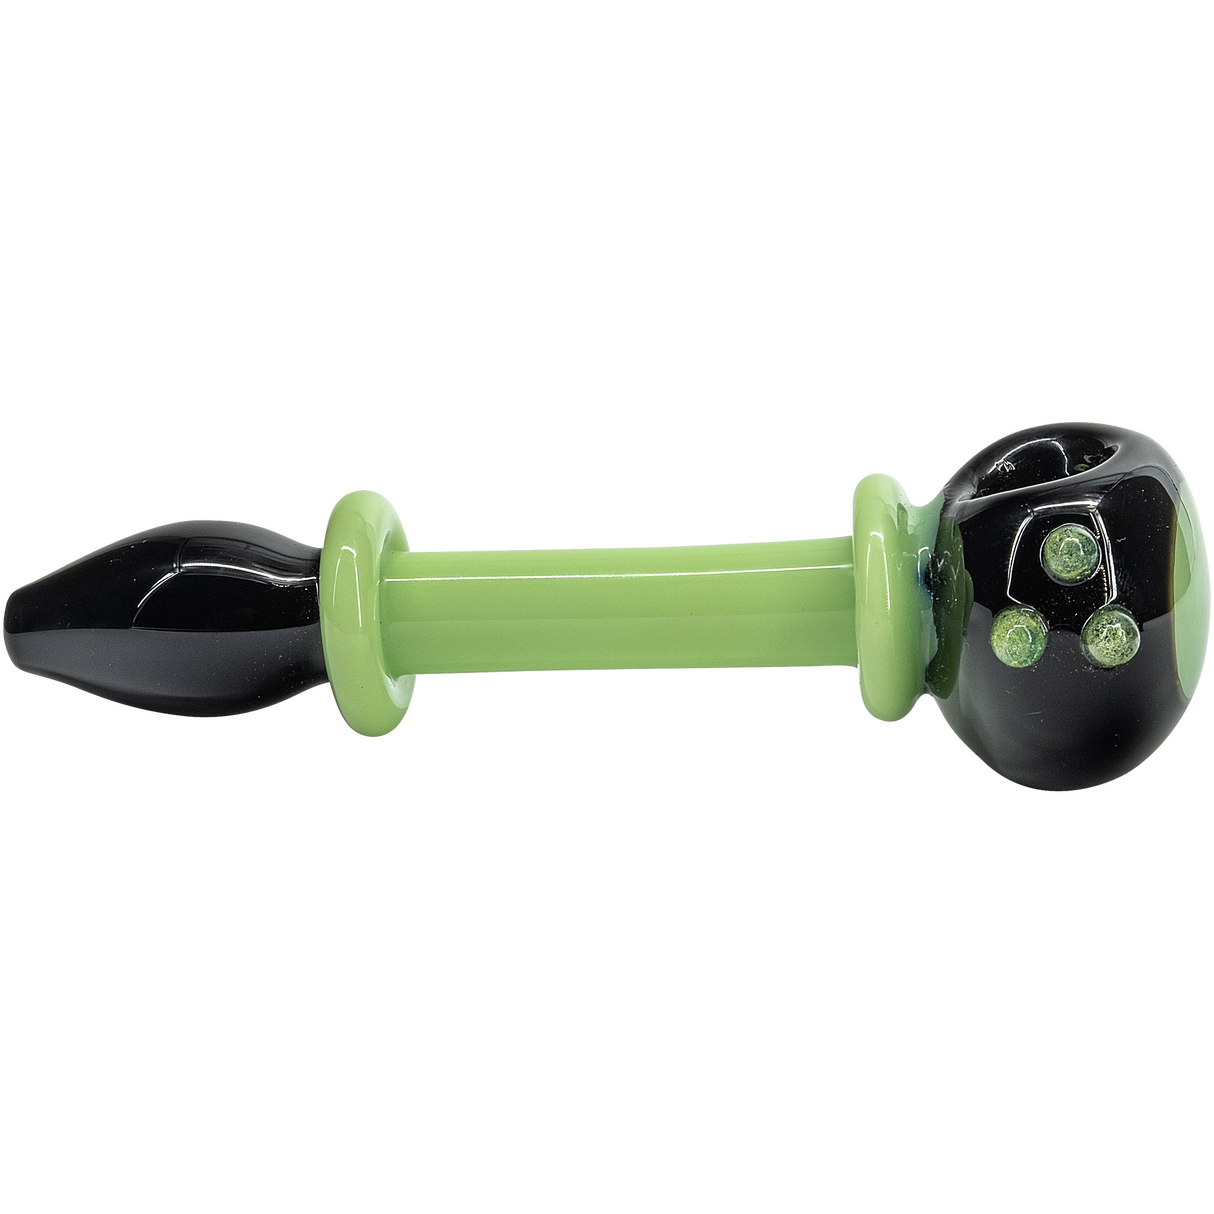 LA Pipes "Ray Gun" Green Slime Glass Spoon